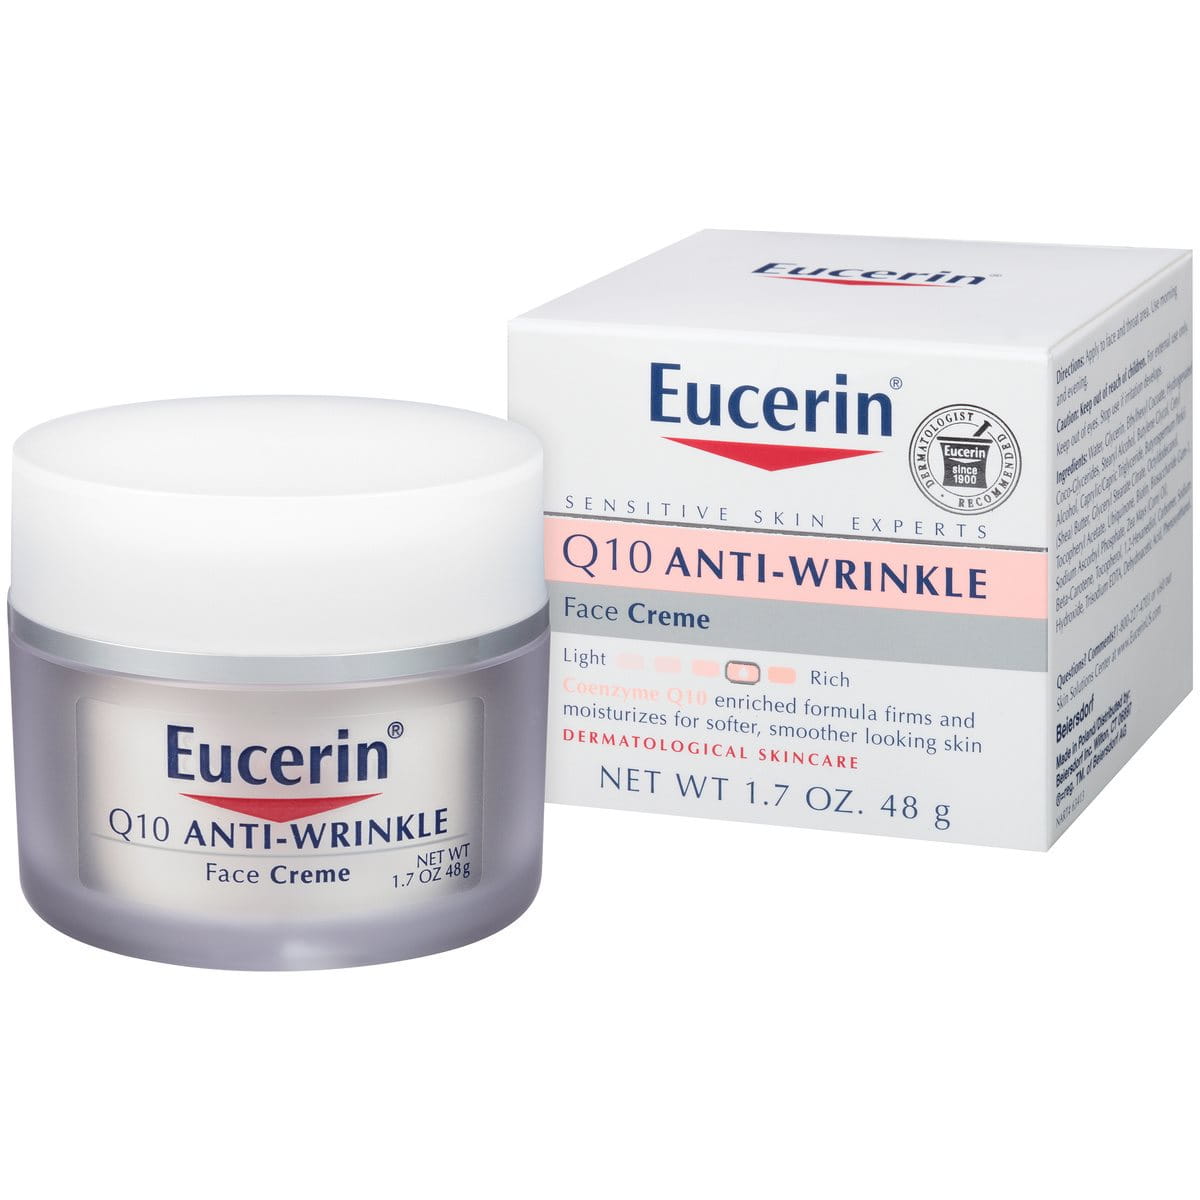 Q10 Anti-Wrinkle Sensitive Skin Face Creme 1.7 oz. Box